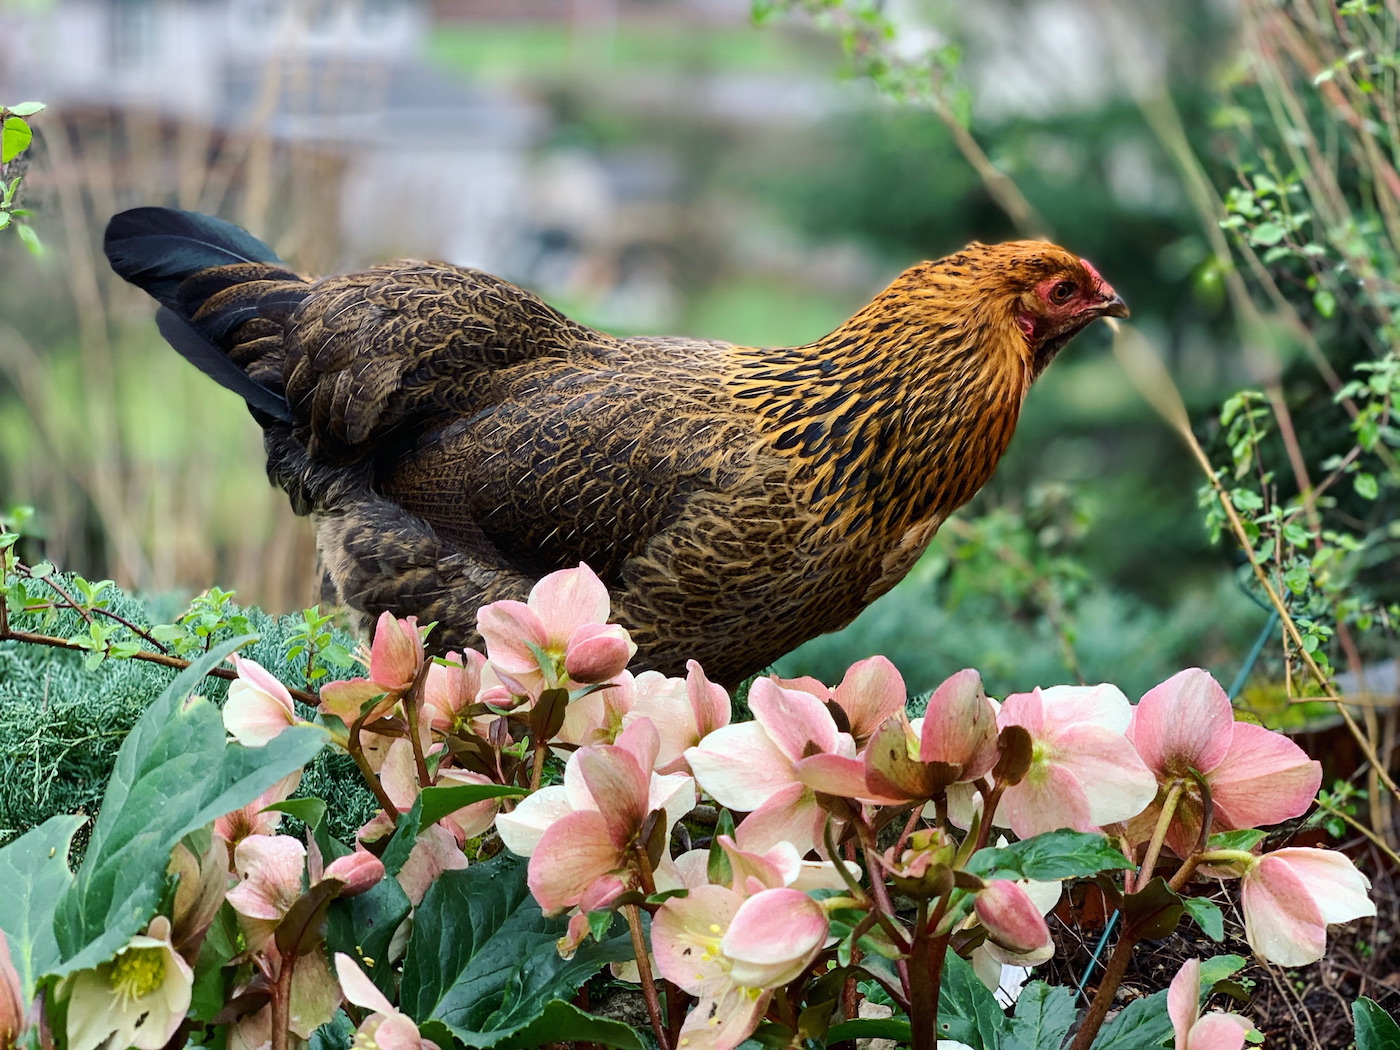 A chicken walking above a growing garden of flowers